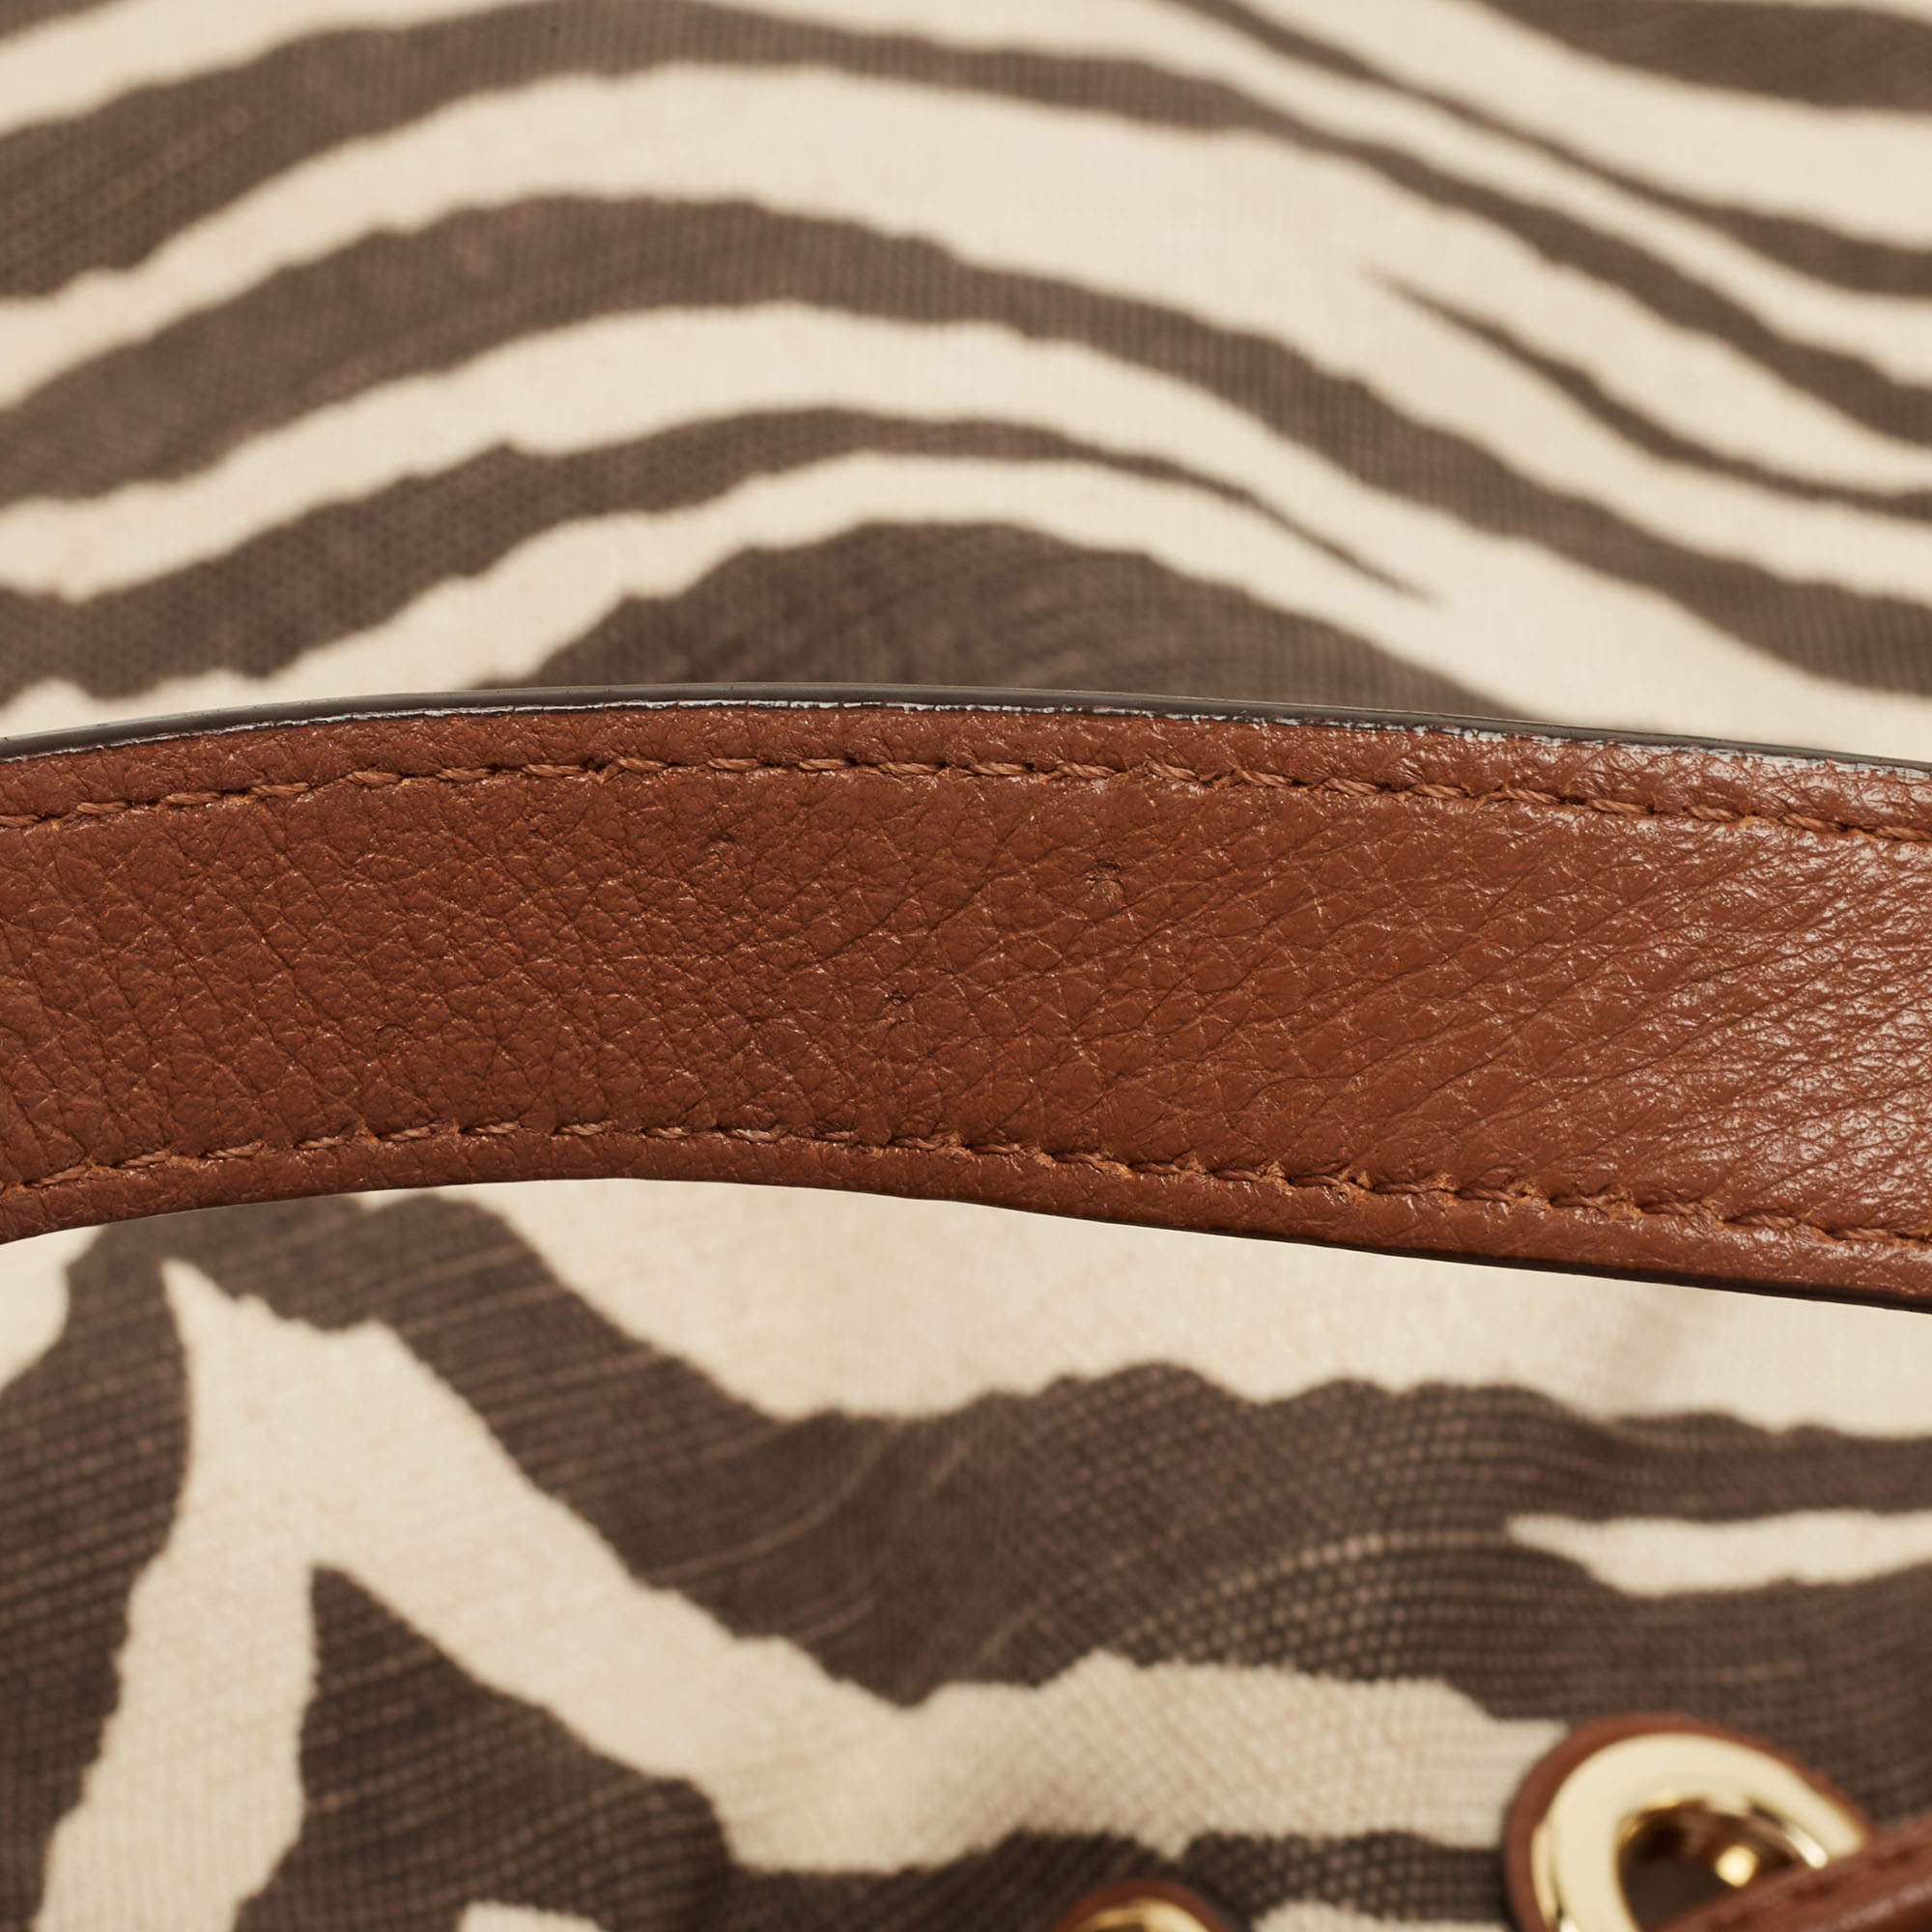 Michael Kors Brown/Beige Zebra Print Canvas and Leather Marina Shoulder Bag